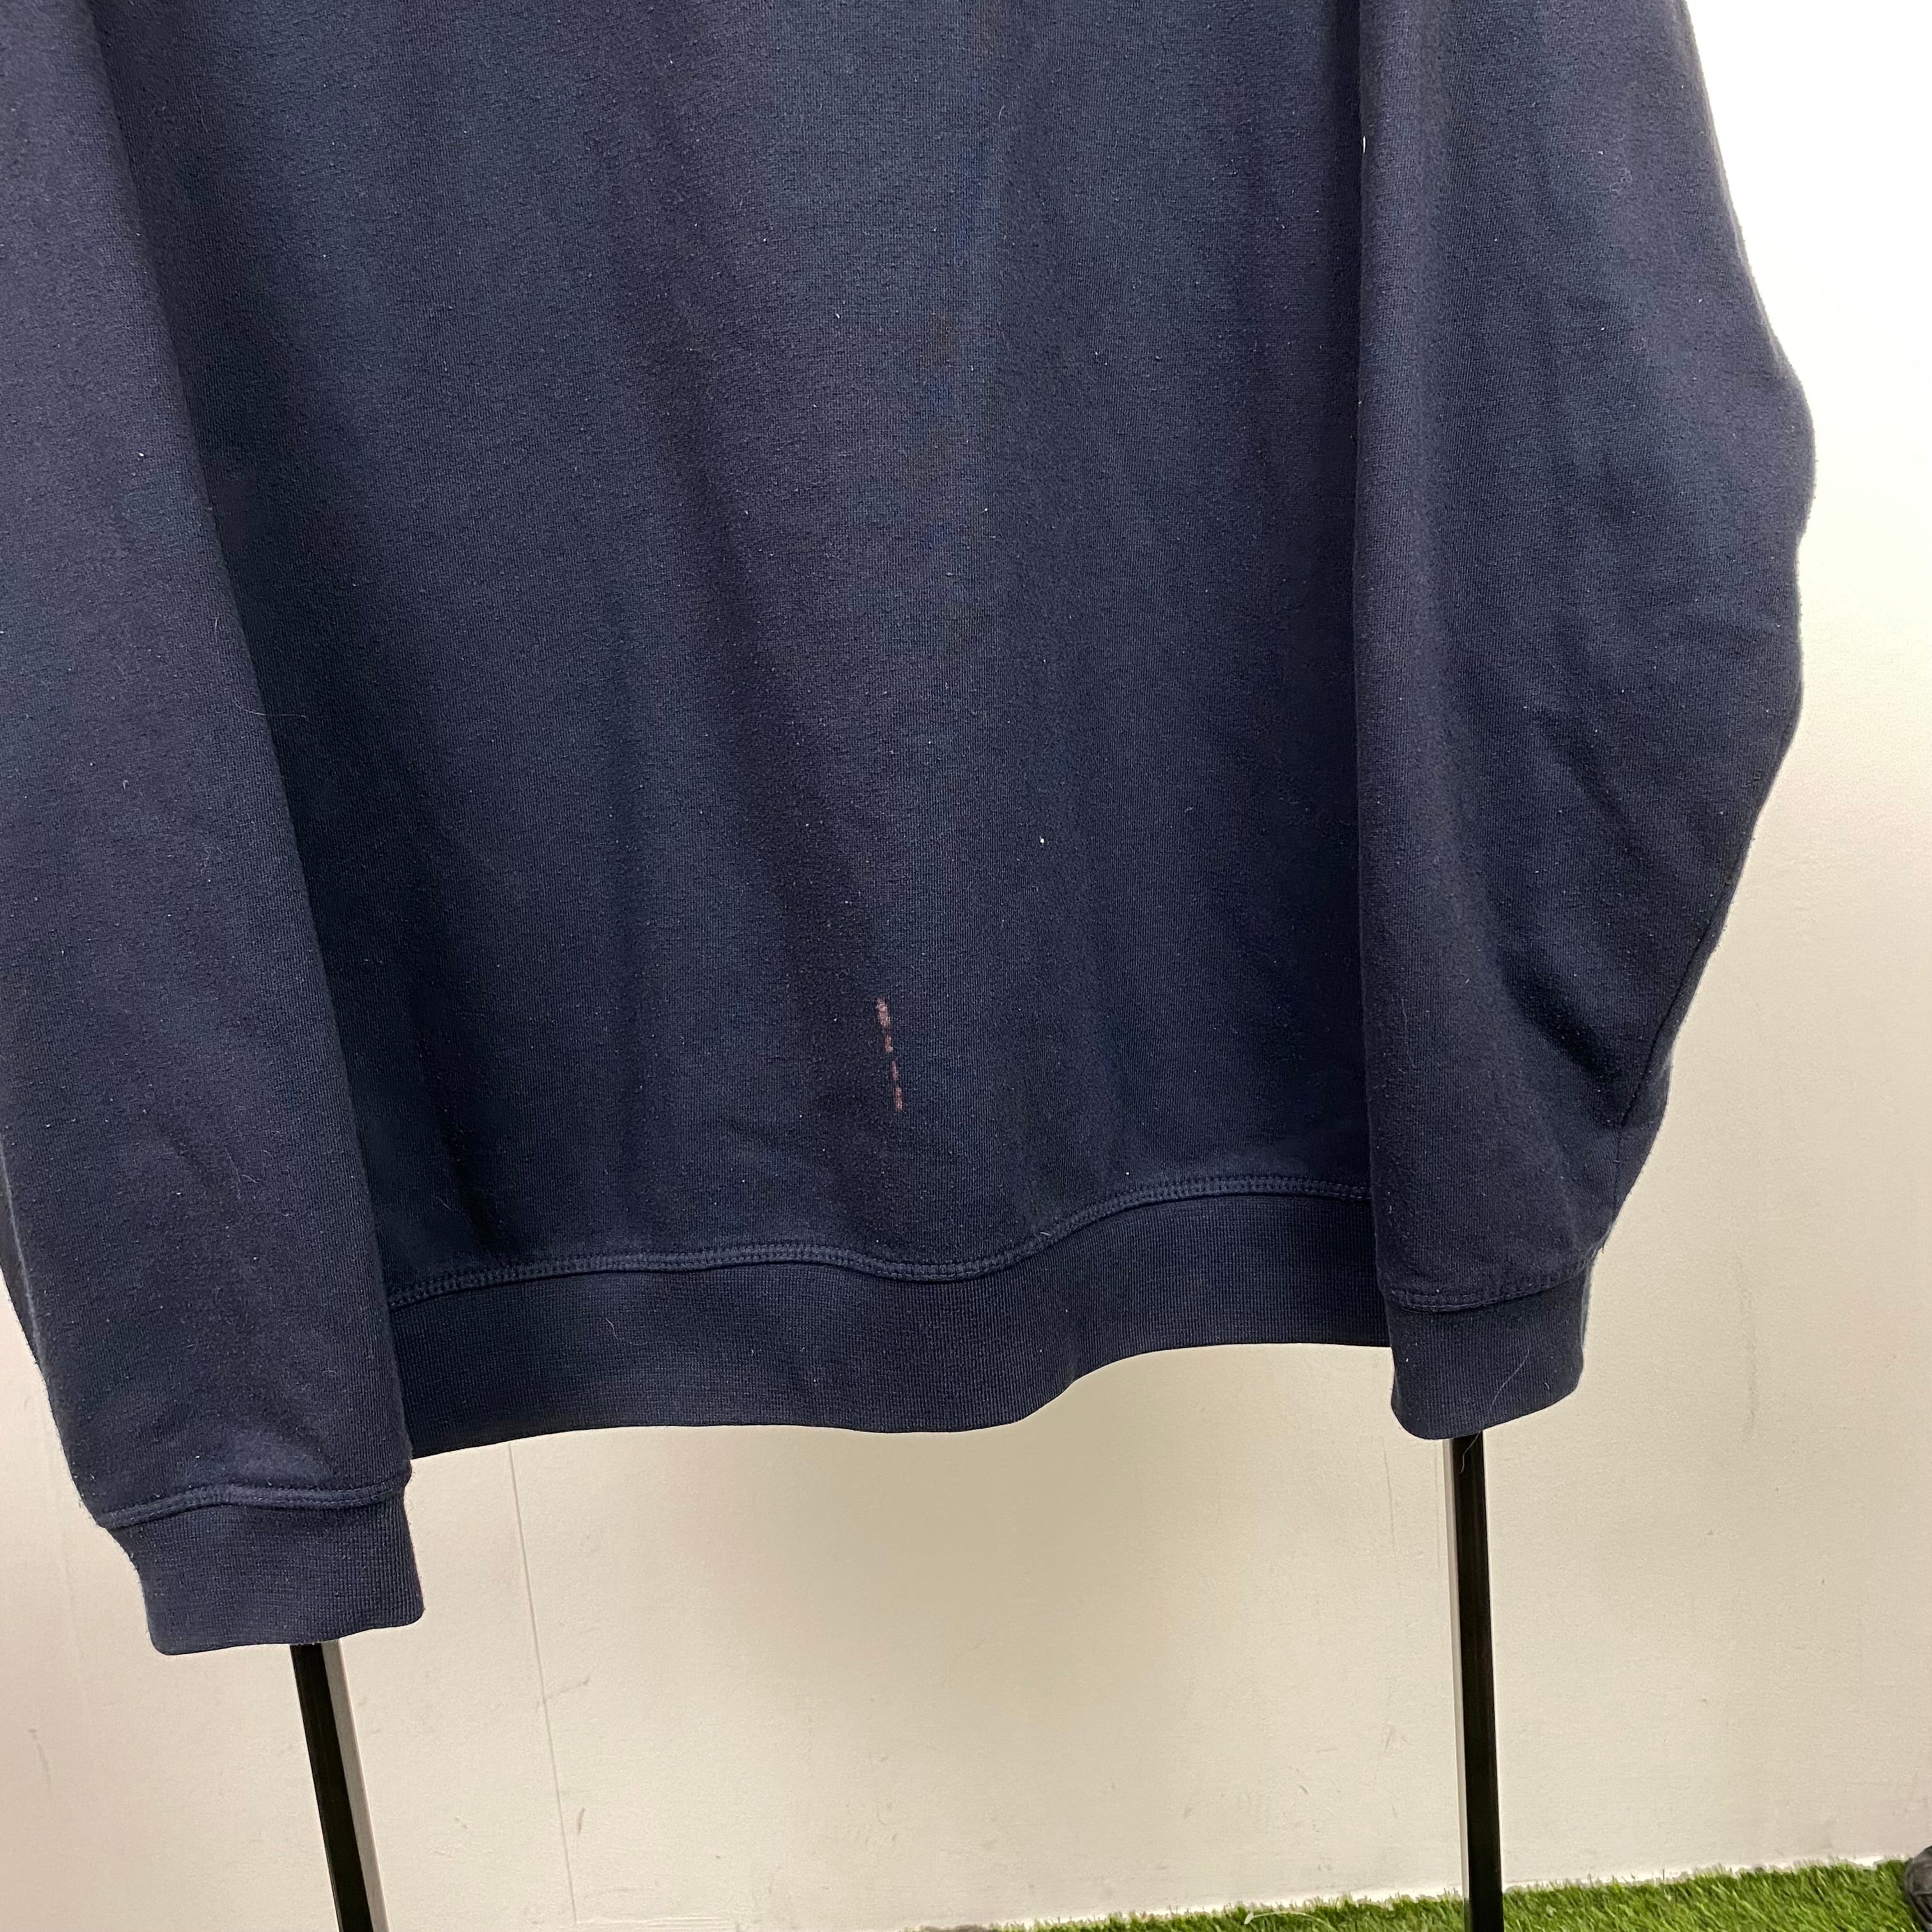 Vintage Reebok Sweatshirt Blue XL